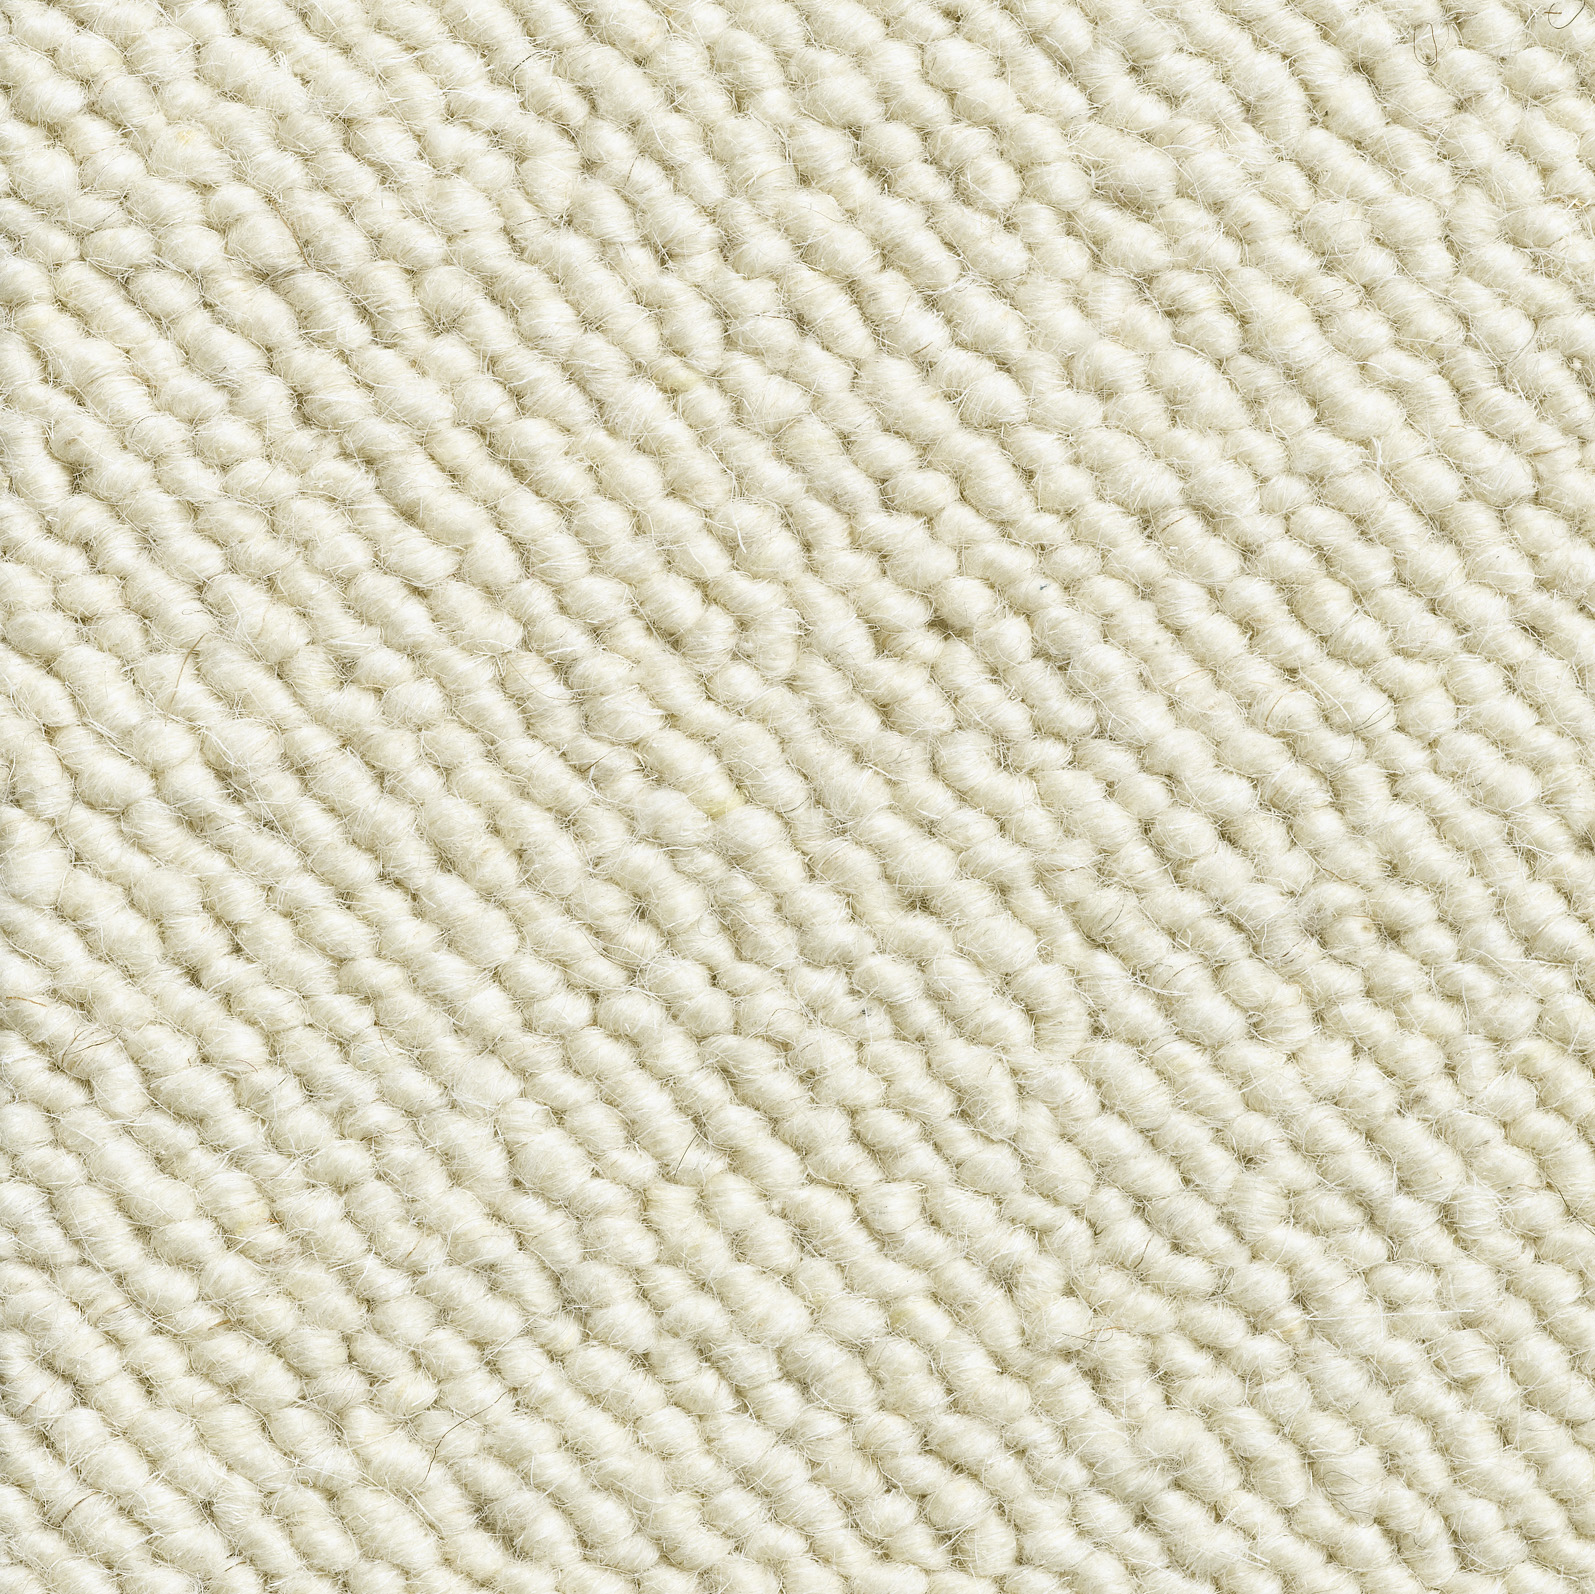 Atlanta 69 hvid - web tæppe uld